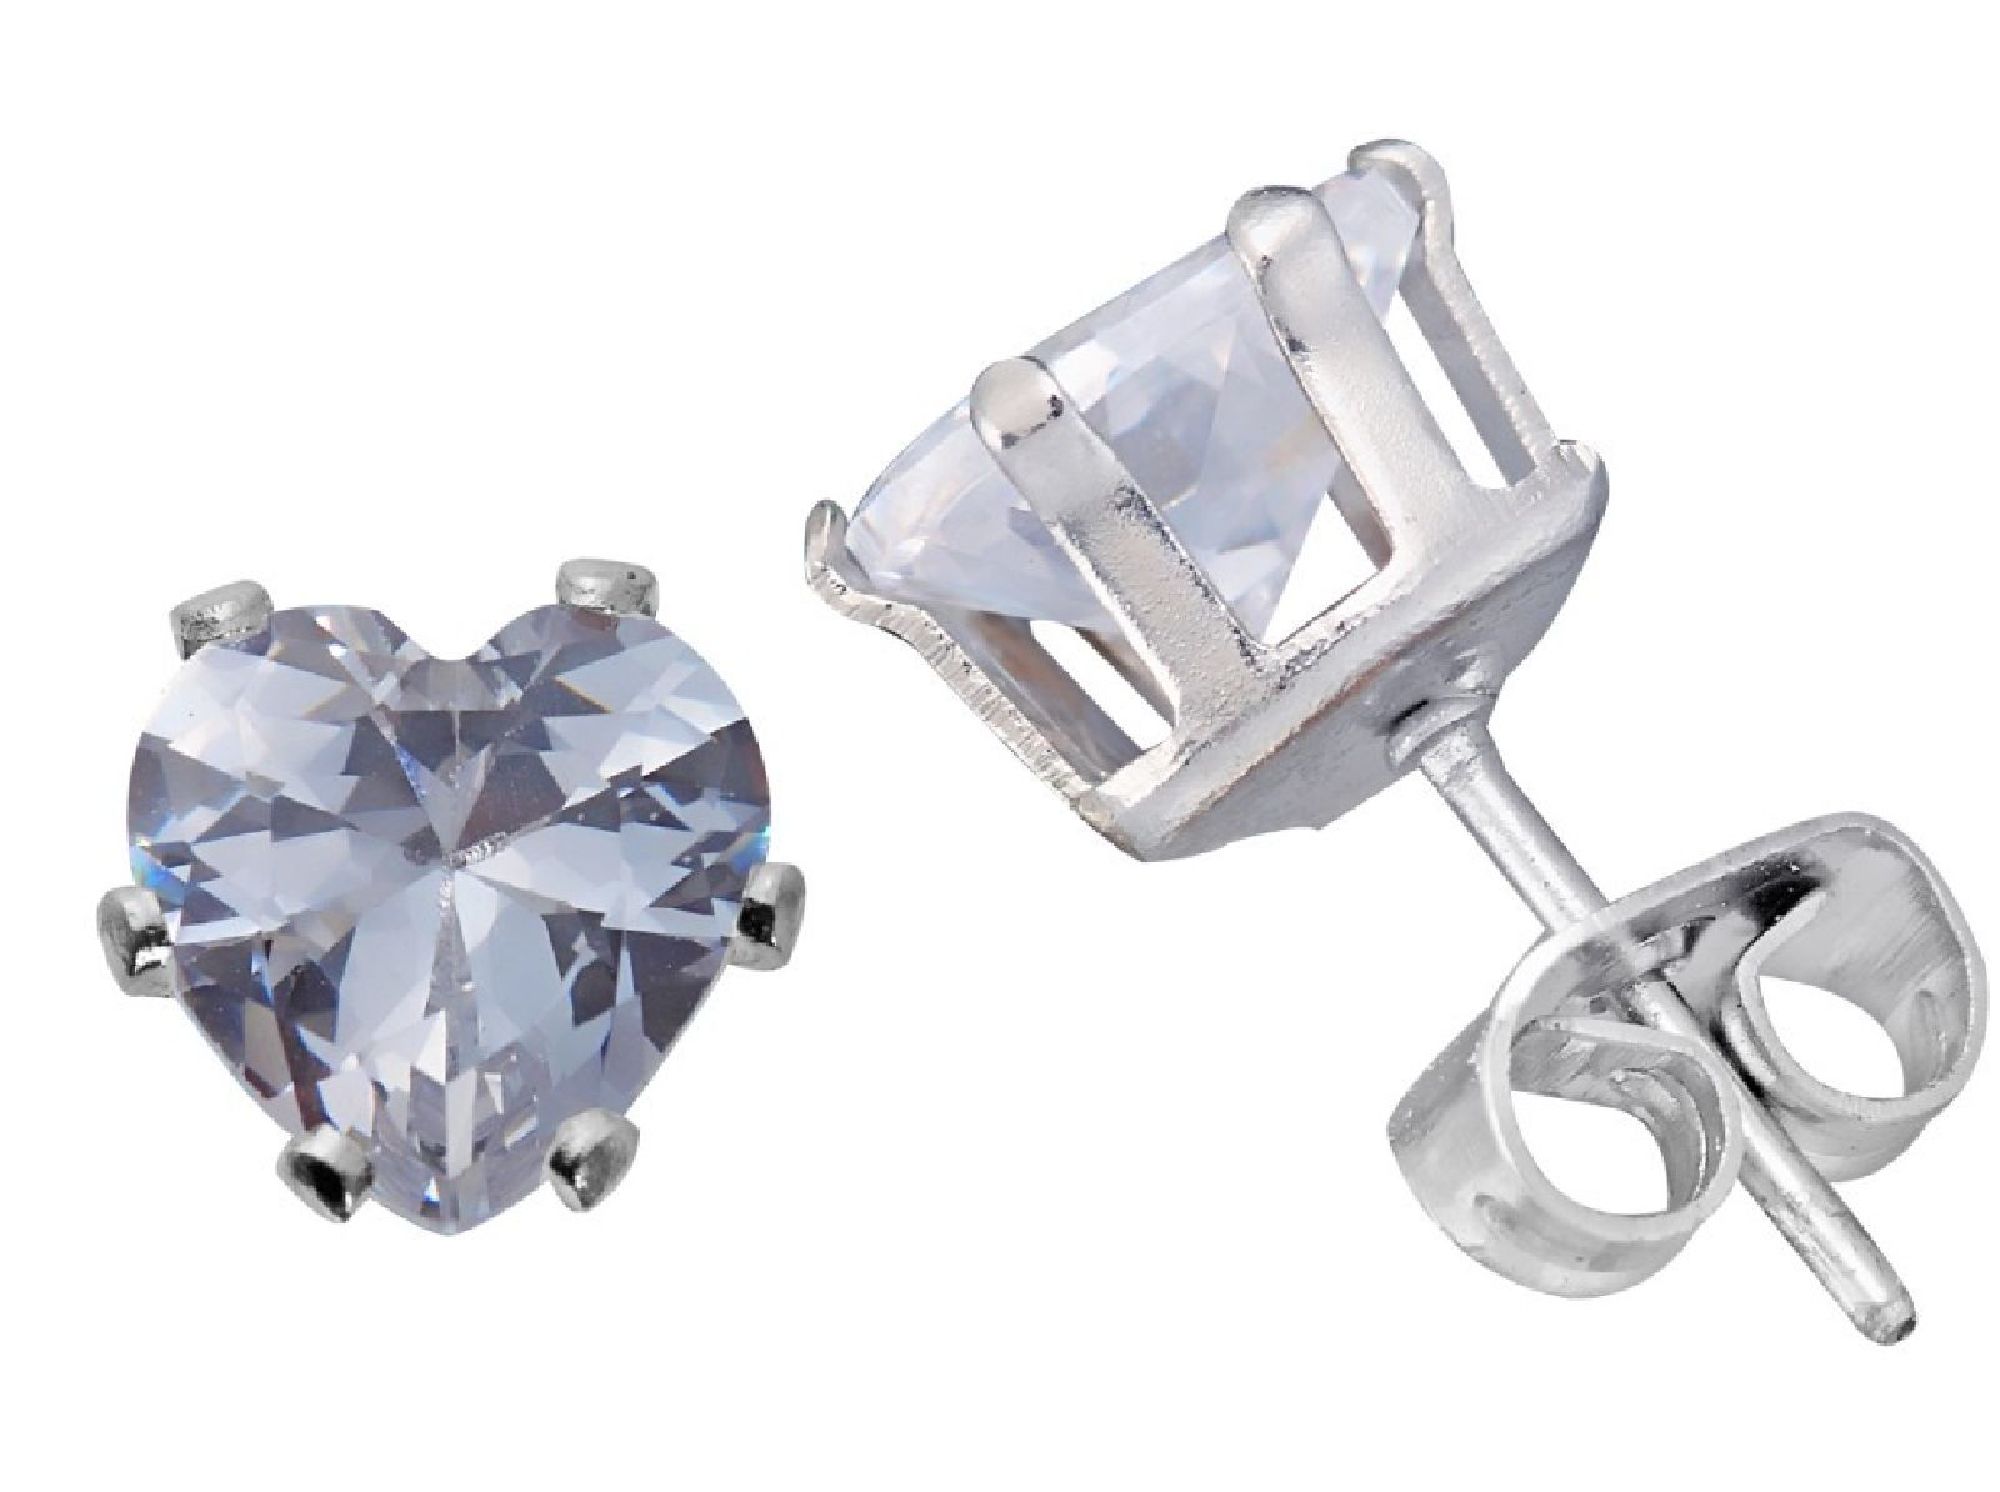 1 Carat Heart Shape White Diamond manmade Stud Earrings in Sterling Silver Designed in France